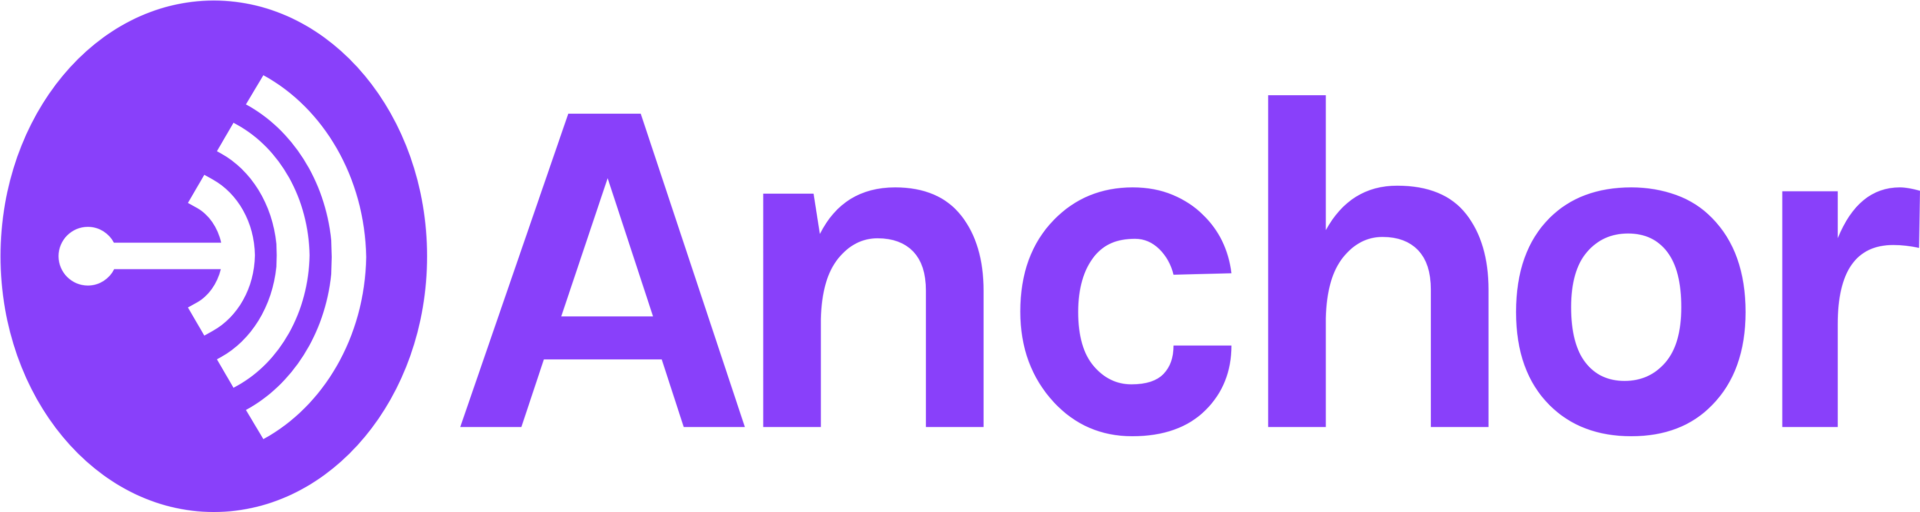 anchor podcast logo